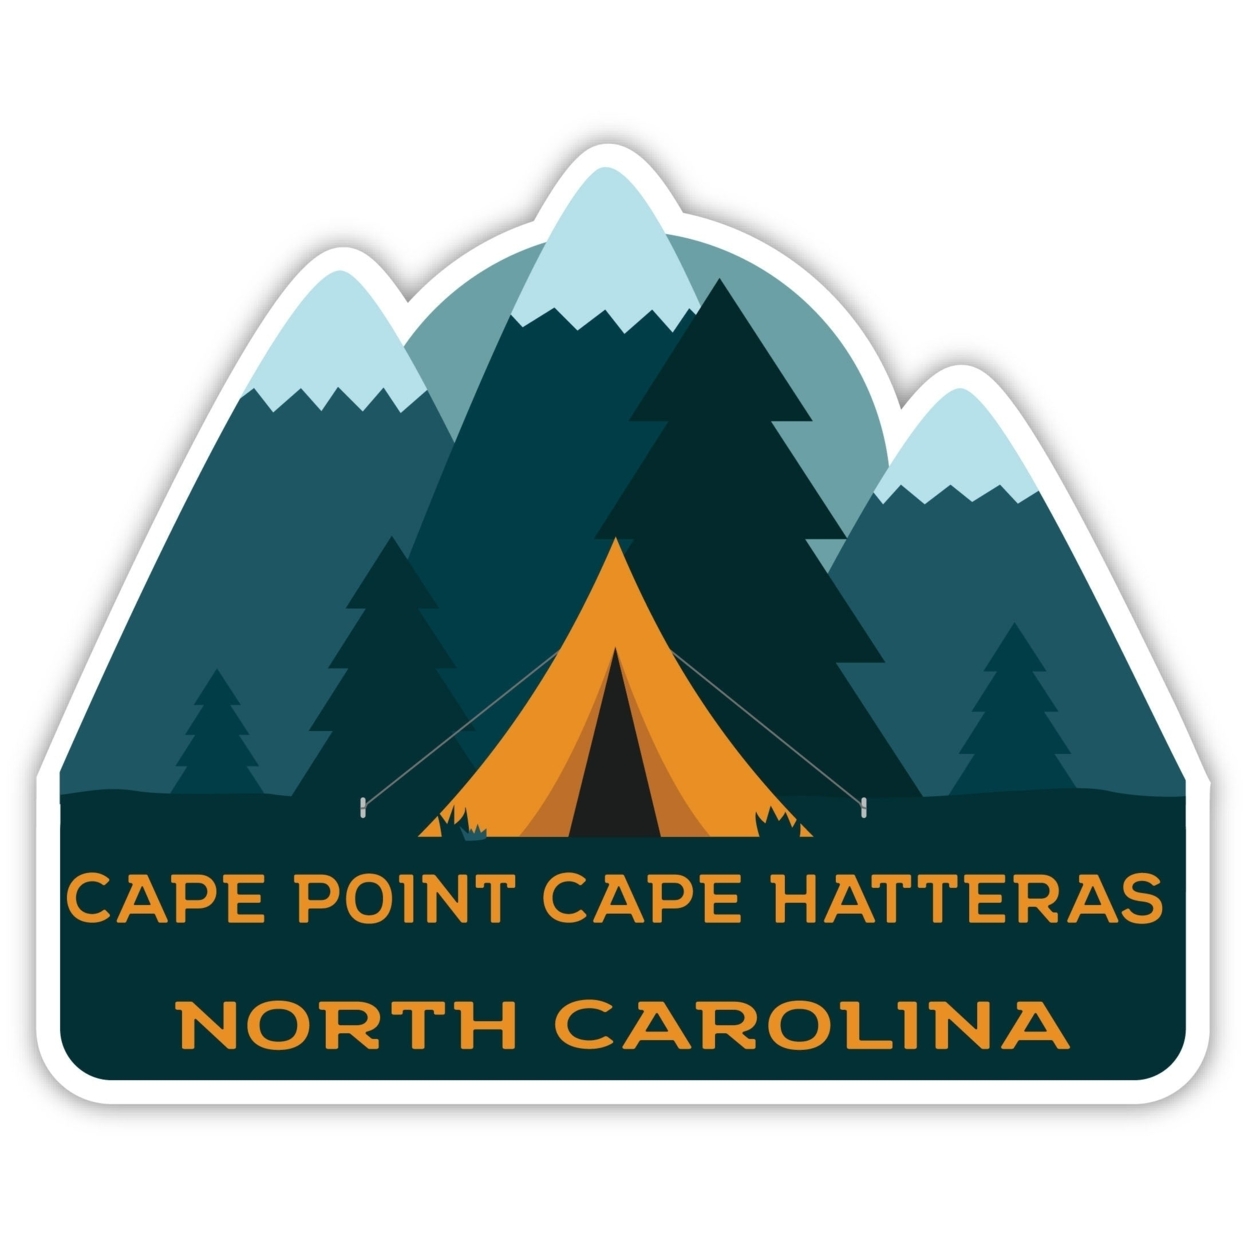 Cape Point Cape Hatteras North Carolina Souvenir Decorative Stickers (Choose Theme And Size) - Single Unit, 6-Inch, Tent